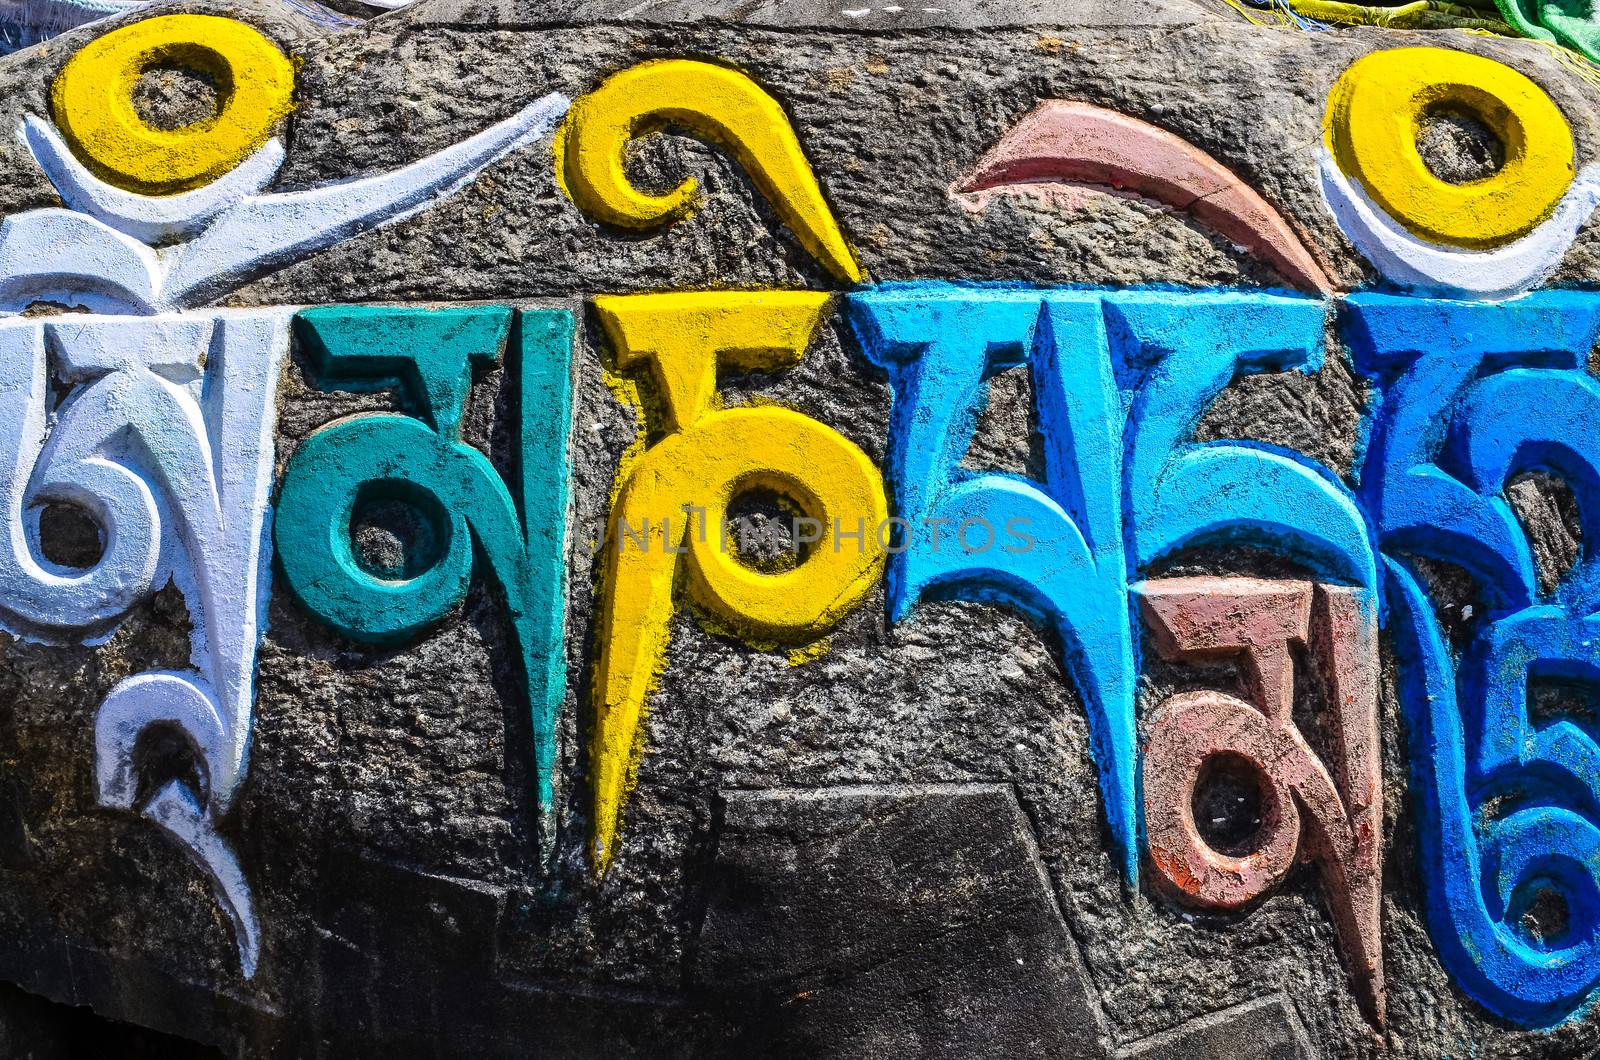 Tibetan buddhist religious symbols carved on stones, Nepal